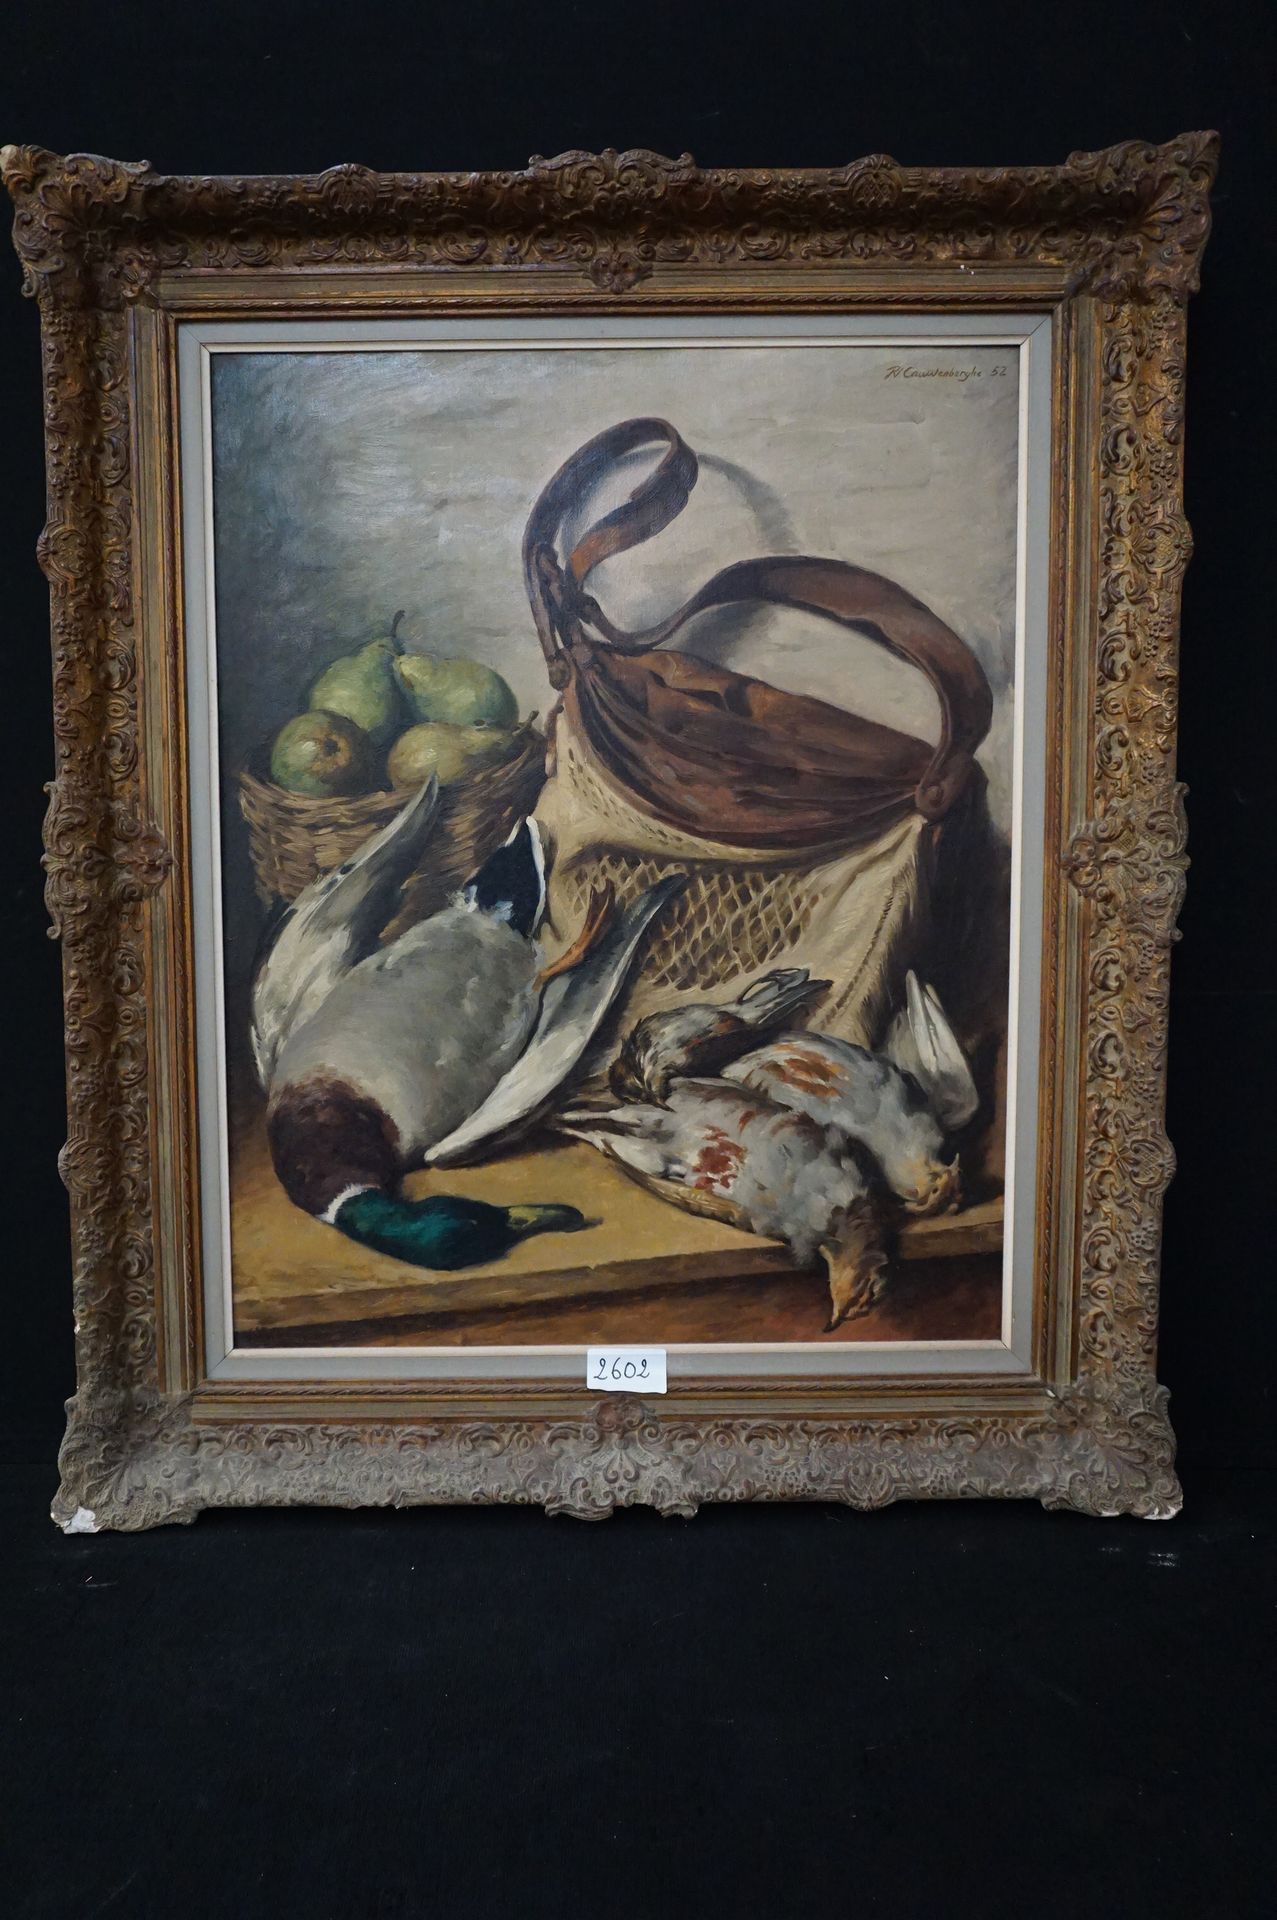 ROBERT CAUWENBERGHE (1905 - 1985) "狩猎静物" - 布面油画 - 右上角有签名和日期 1952 - 81 x 64 cm